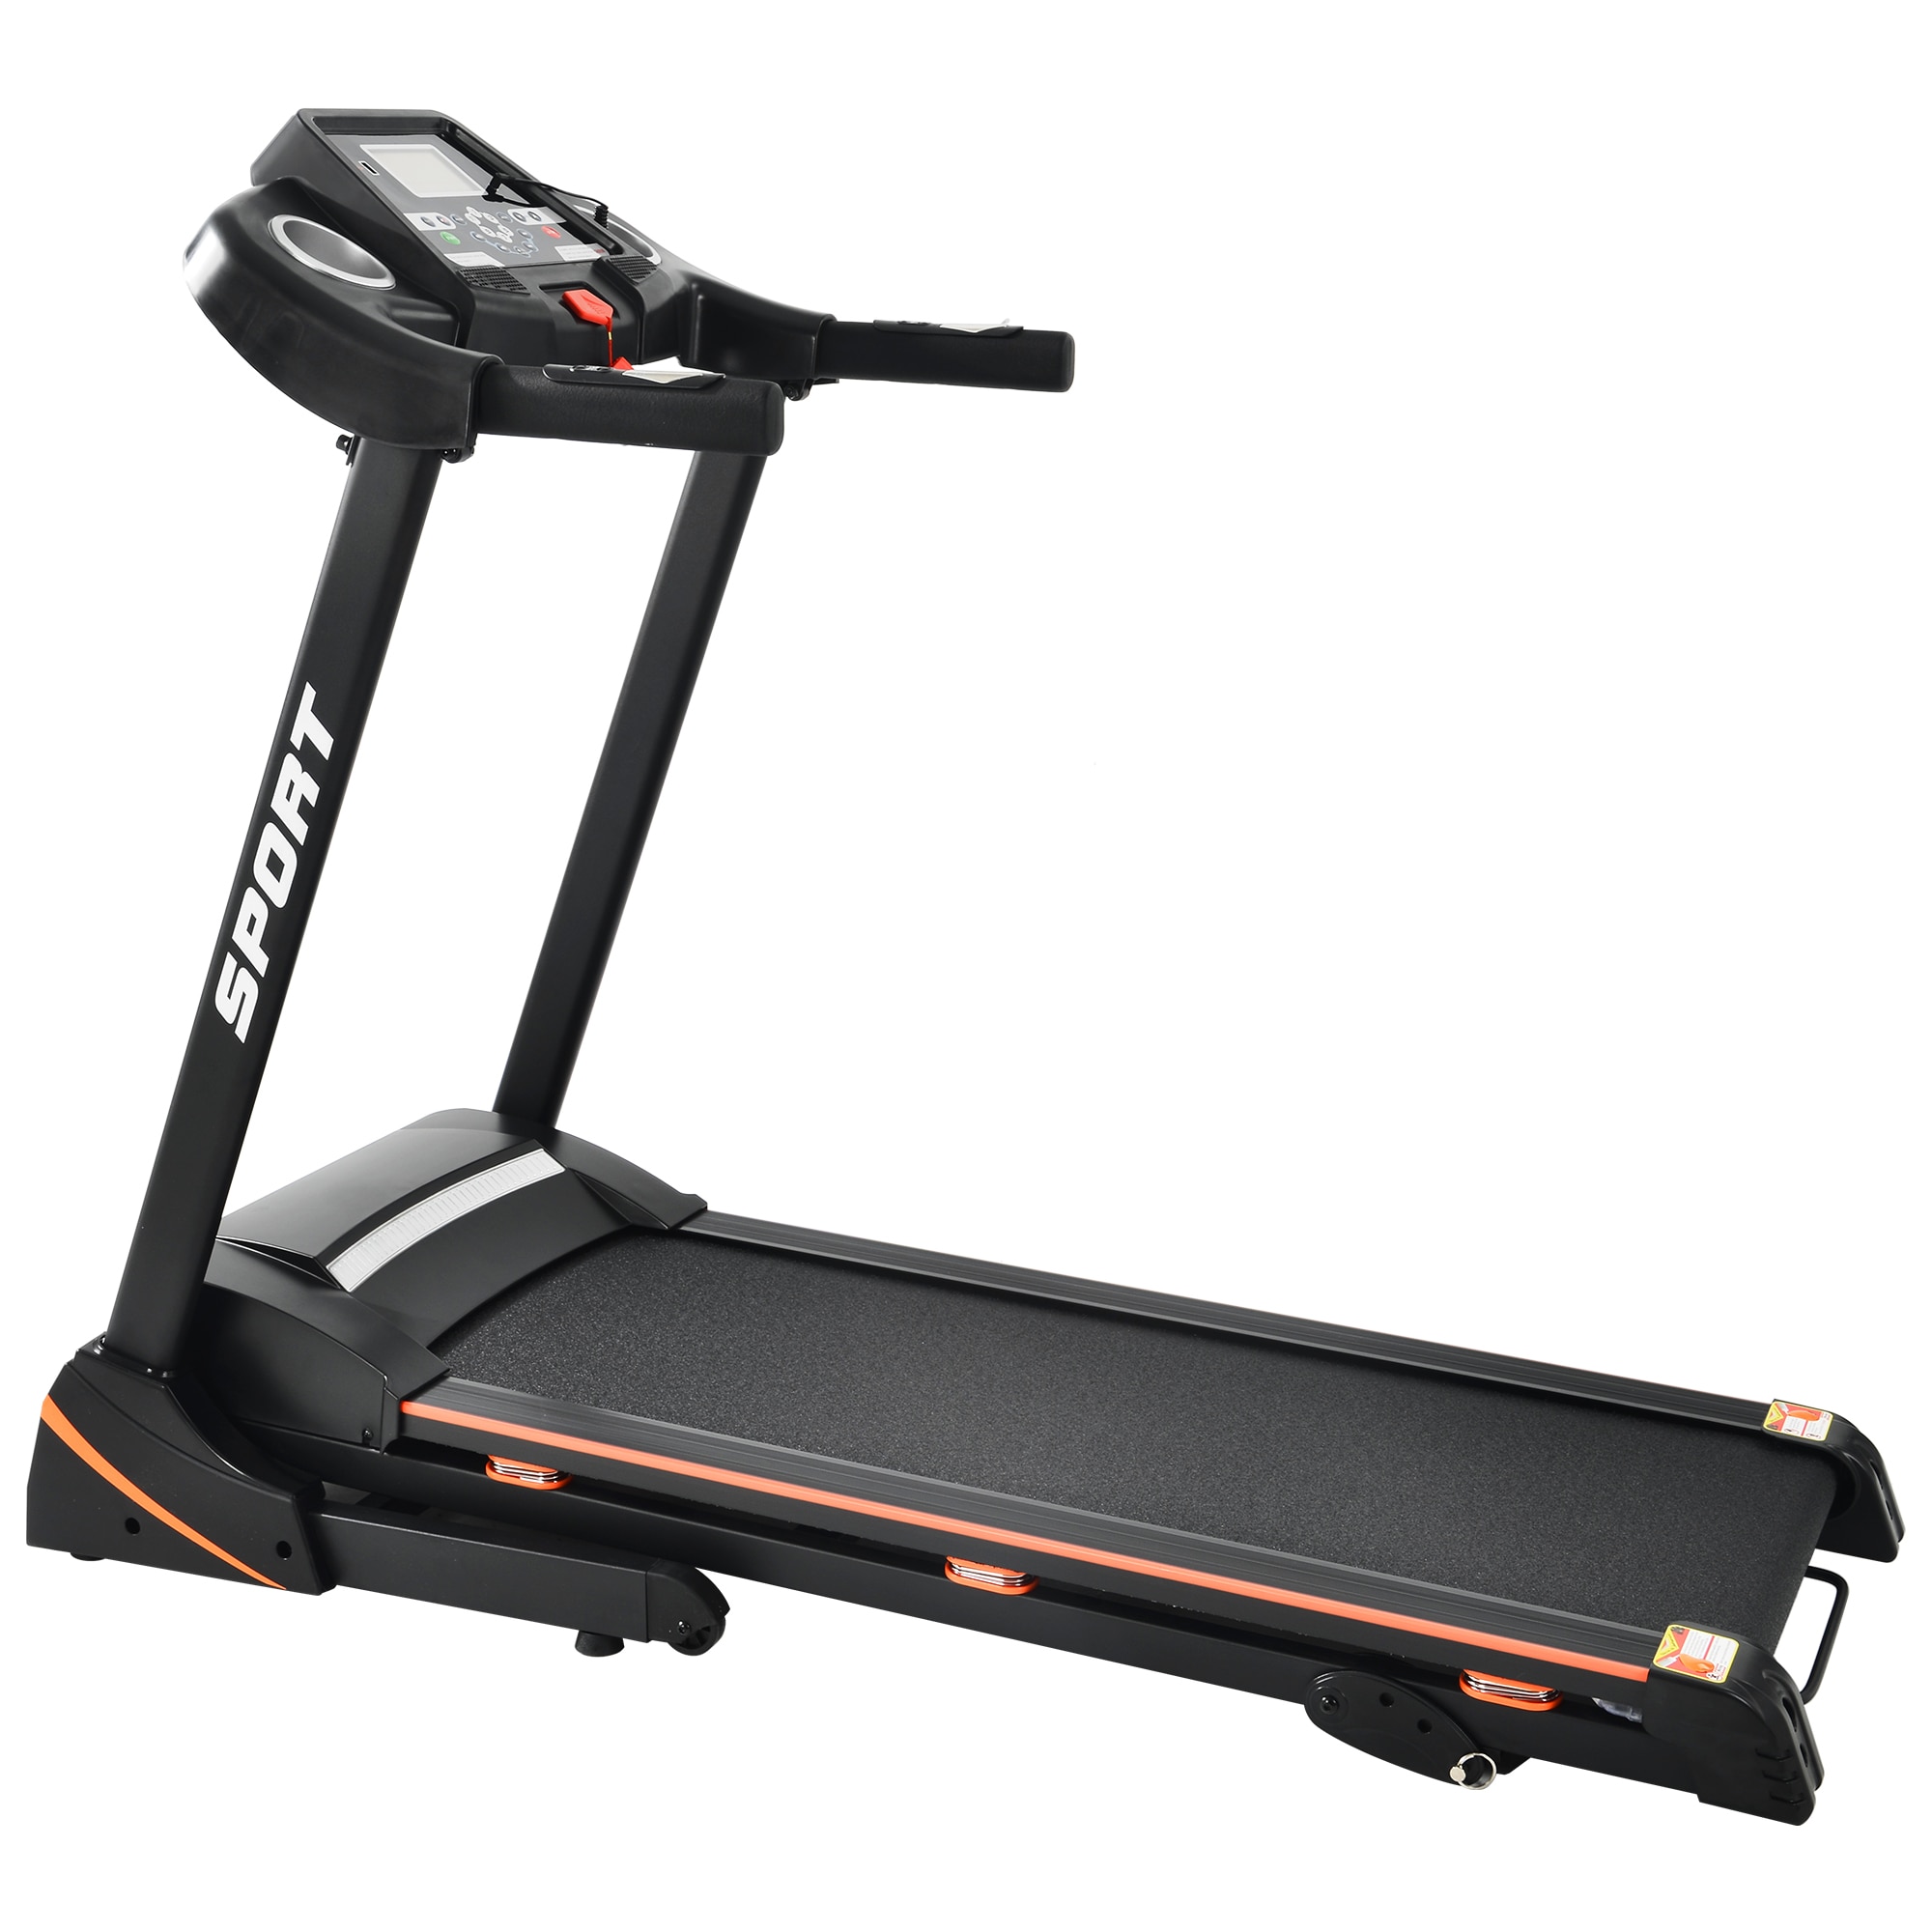 Treadmill Doctor Bike Mat for Home Fitness Equipment - 23.5 X 51